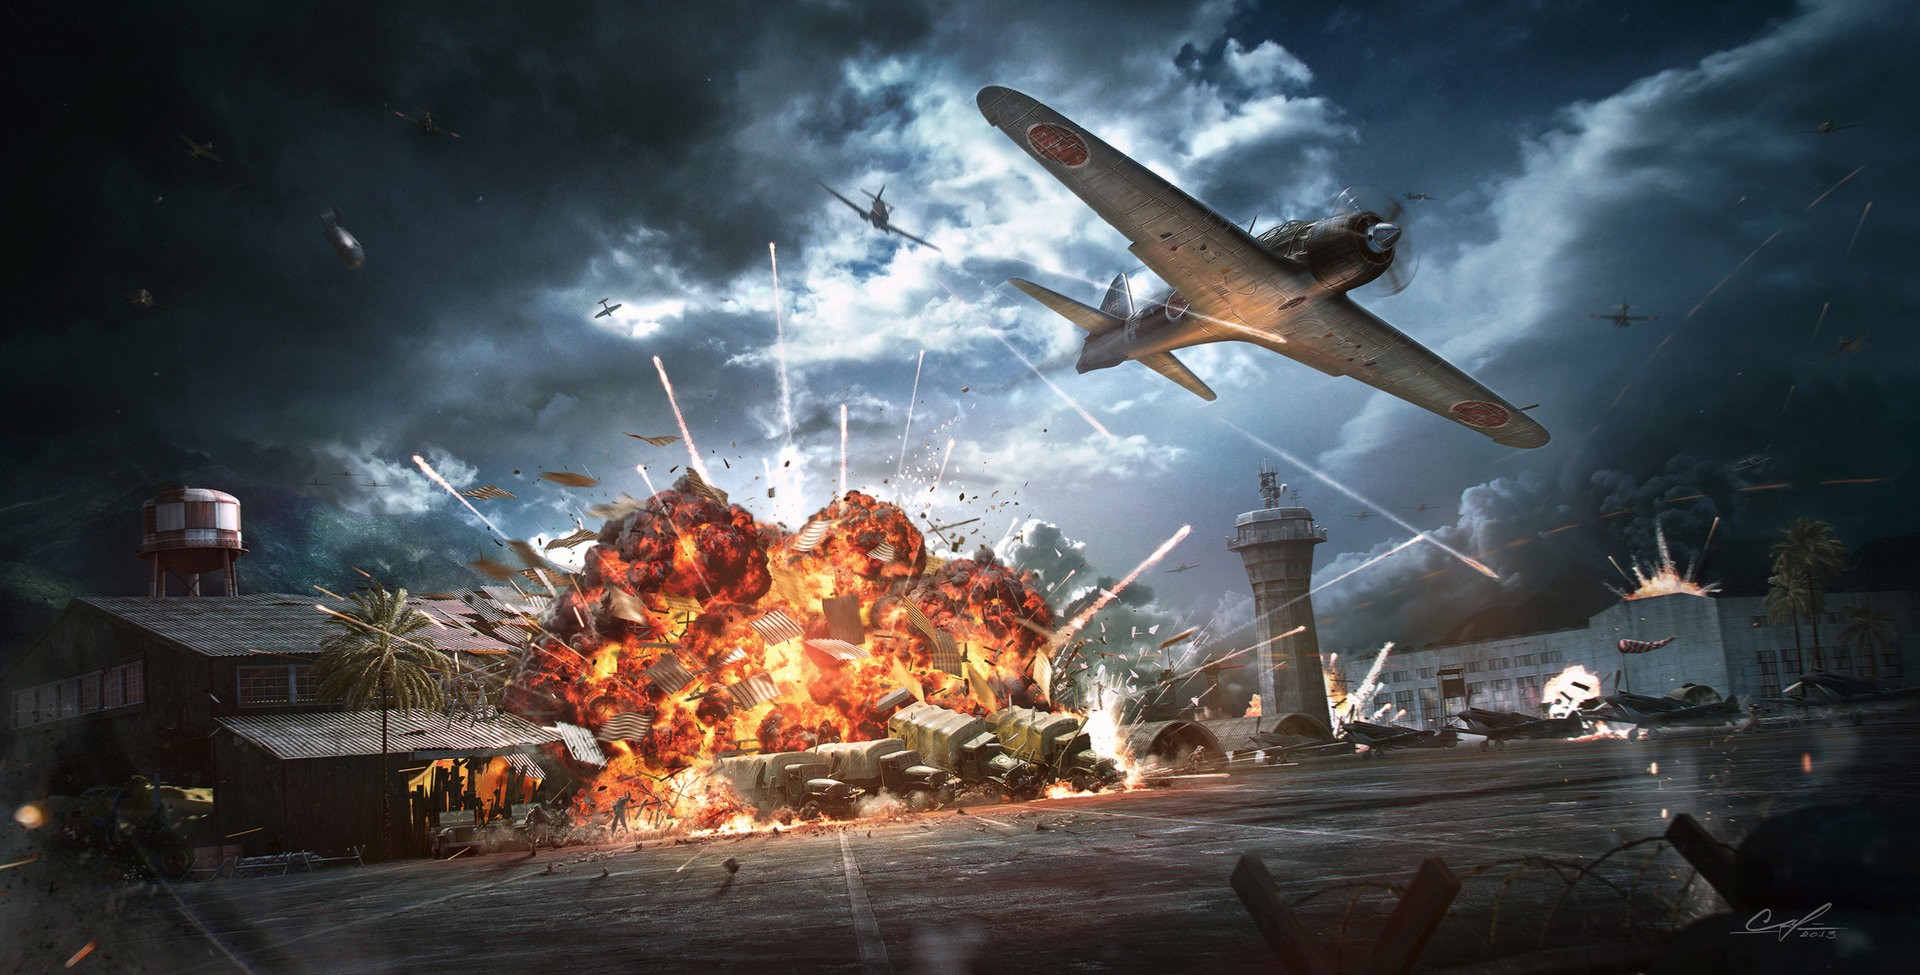 General 1920x975 war Pearl Harbor World War II military vehicle fire explosion military aircraft ArtStation aircraft vehicle 2013 (Year)